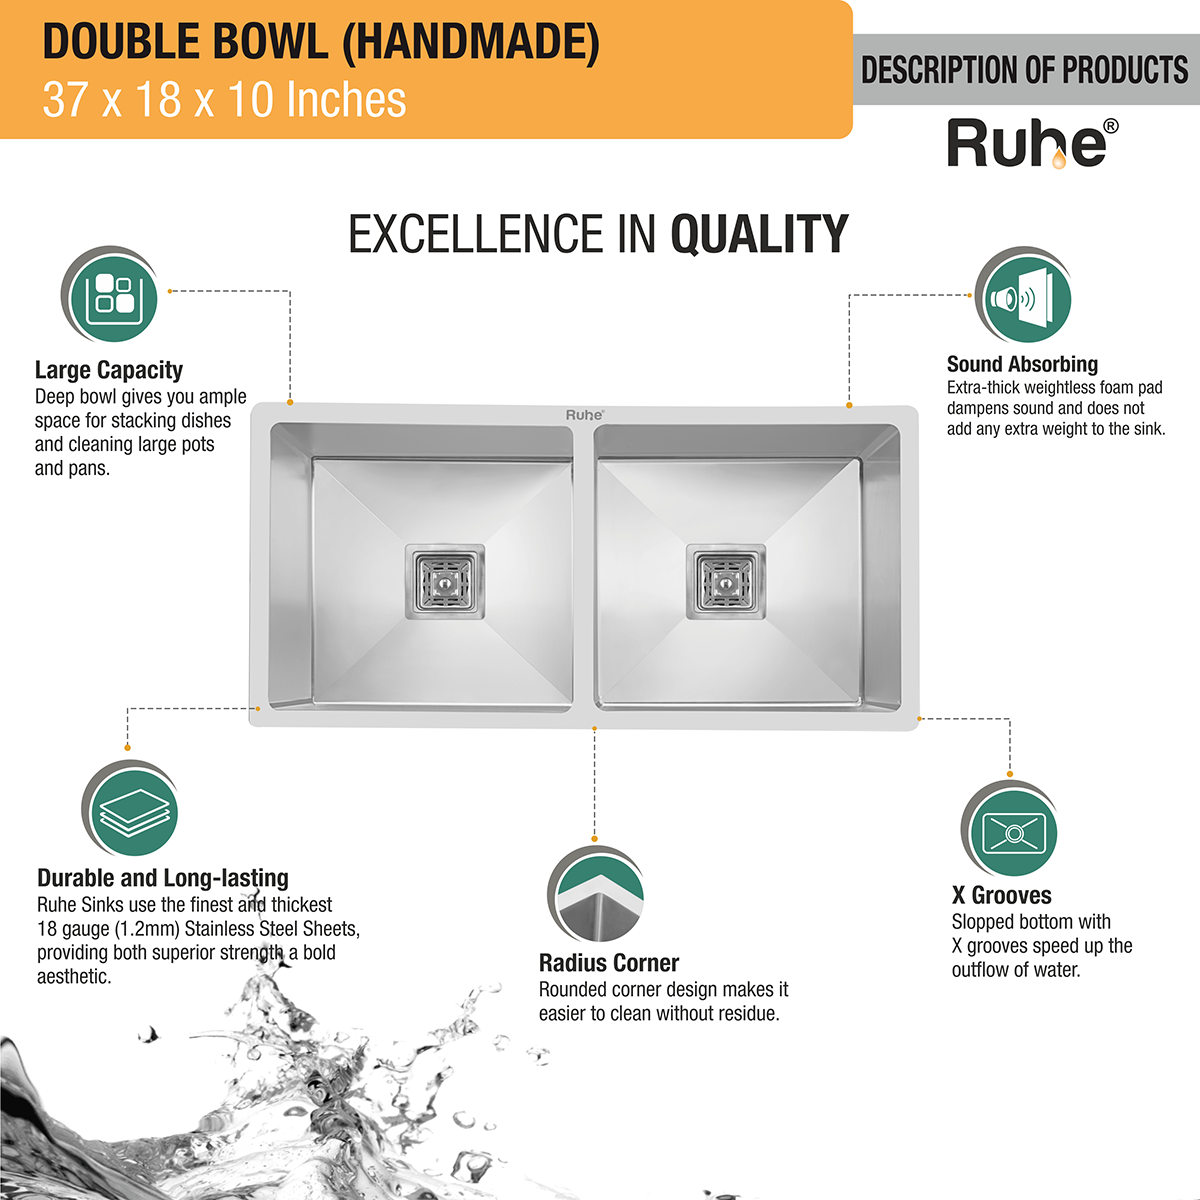 Handmade Double Bowl Premium Kitchen Sink (37 x 18 x 10 Inches) description of product